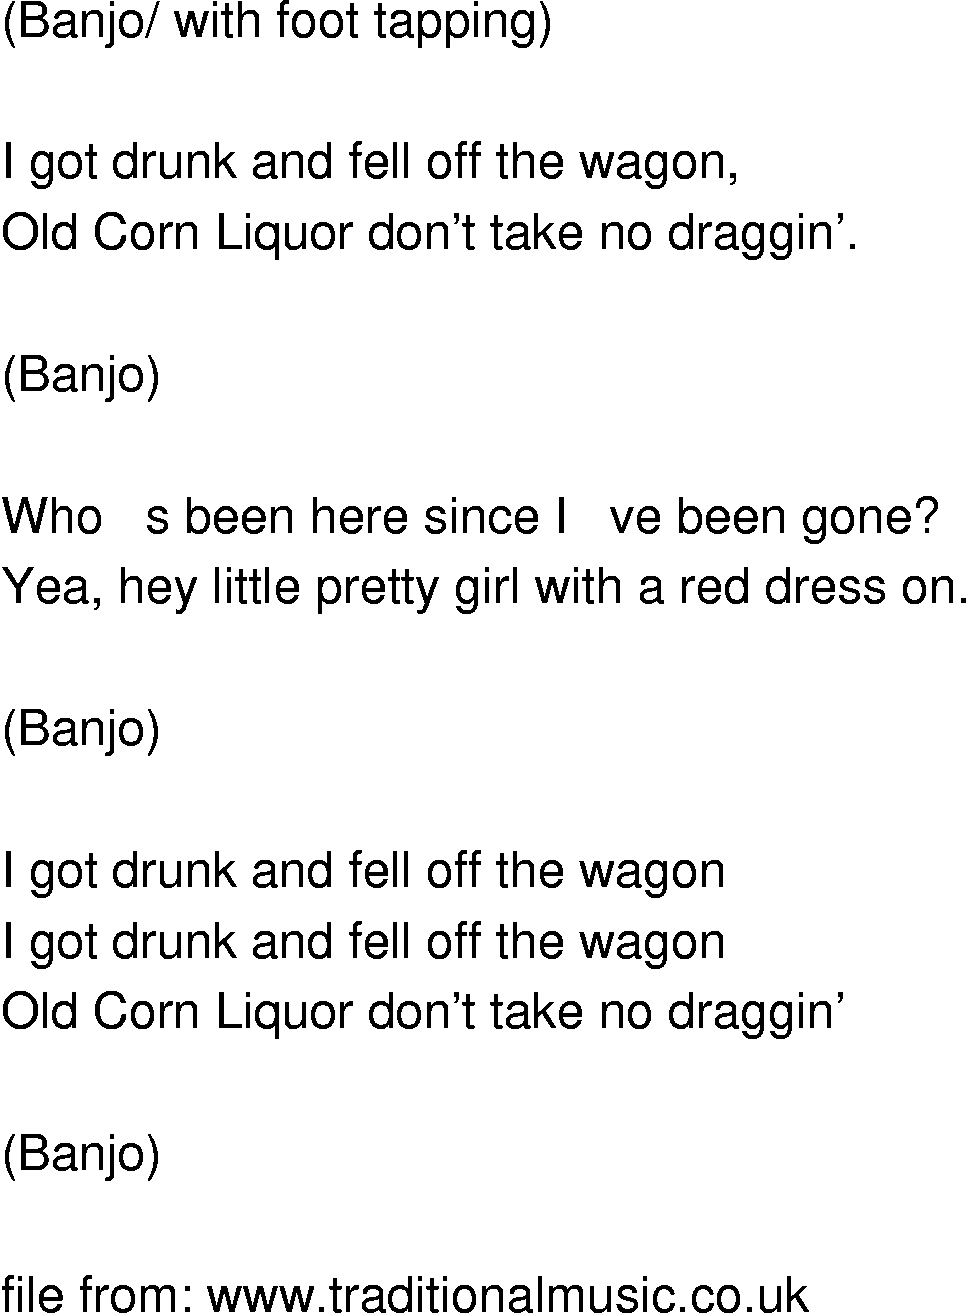 Old-Time (oldtimey) Song Lyrics - old corn liquor